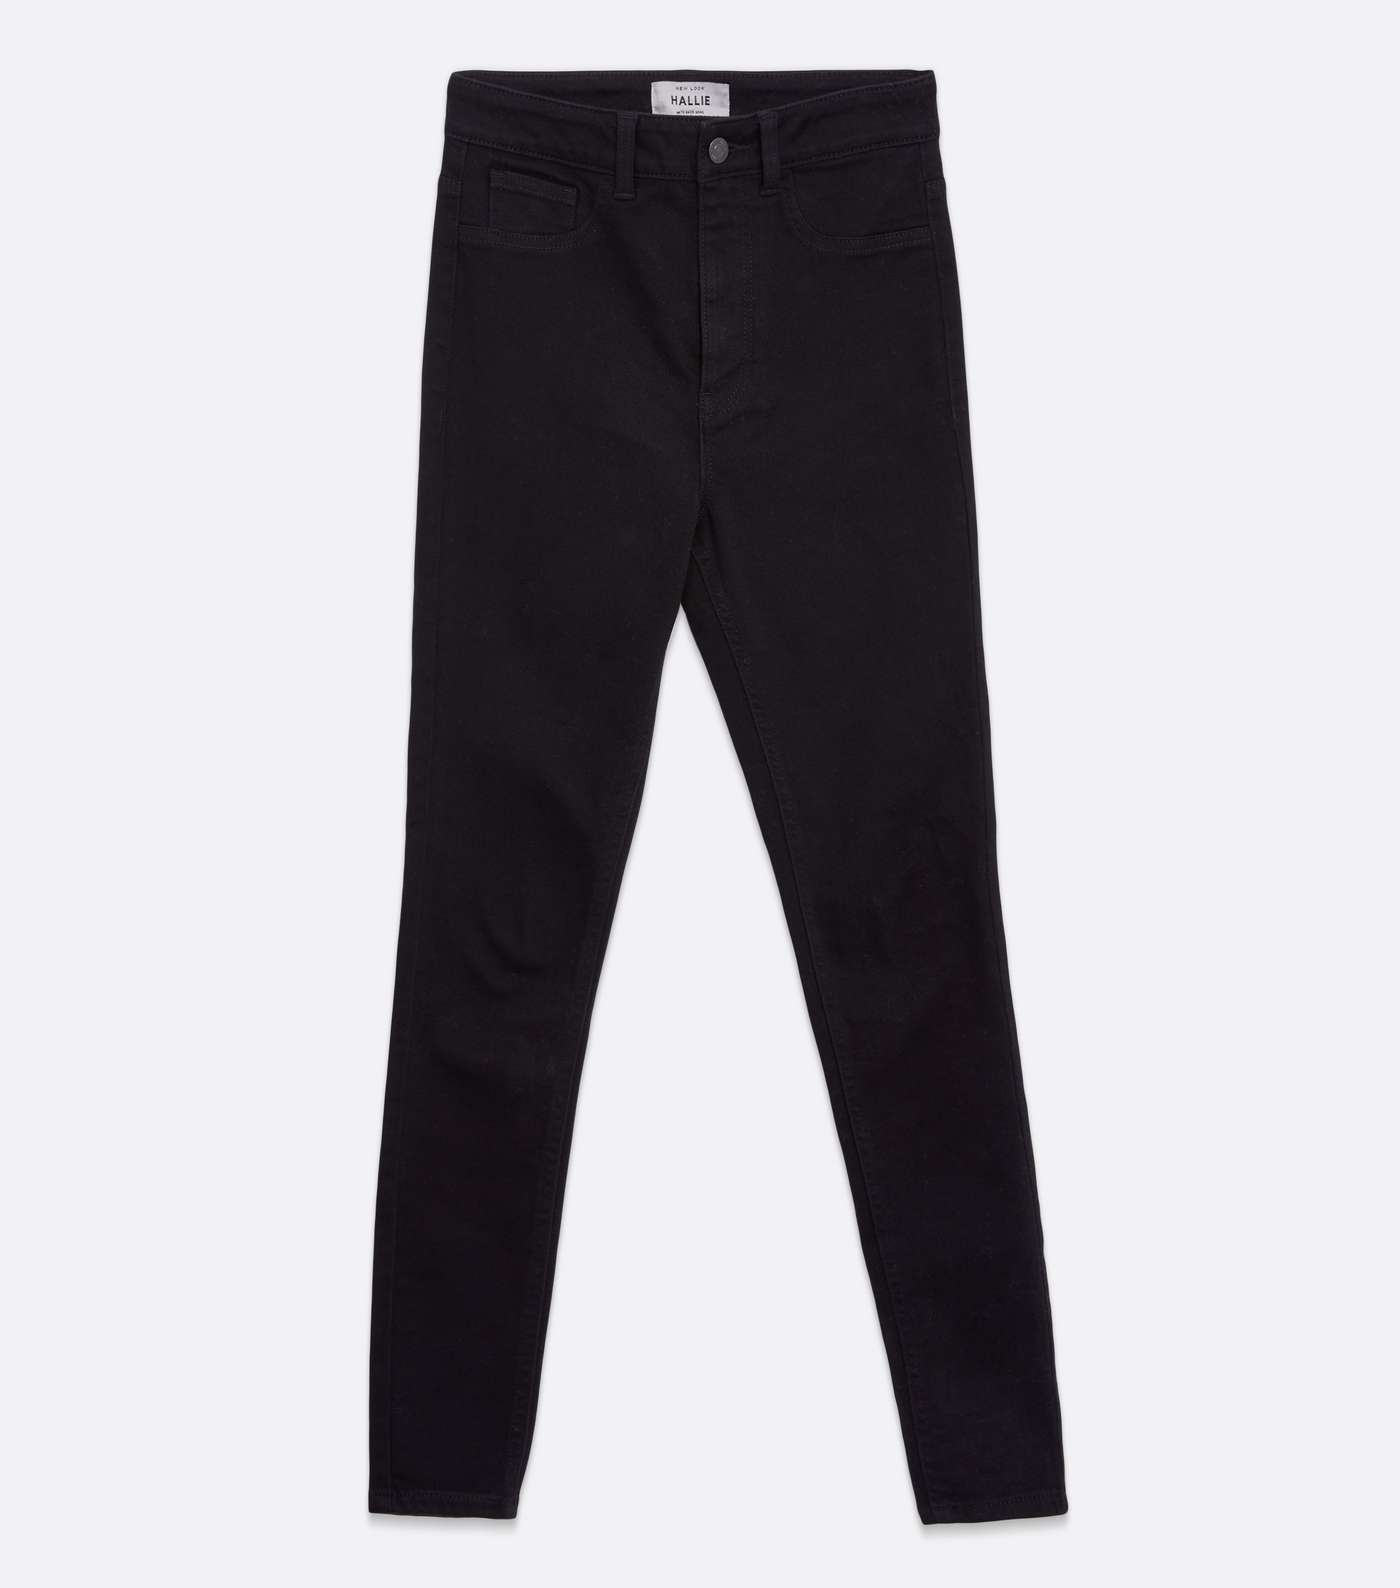 Black High Waist Hallie Super Skinny Jeans Image 5